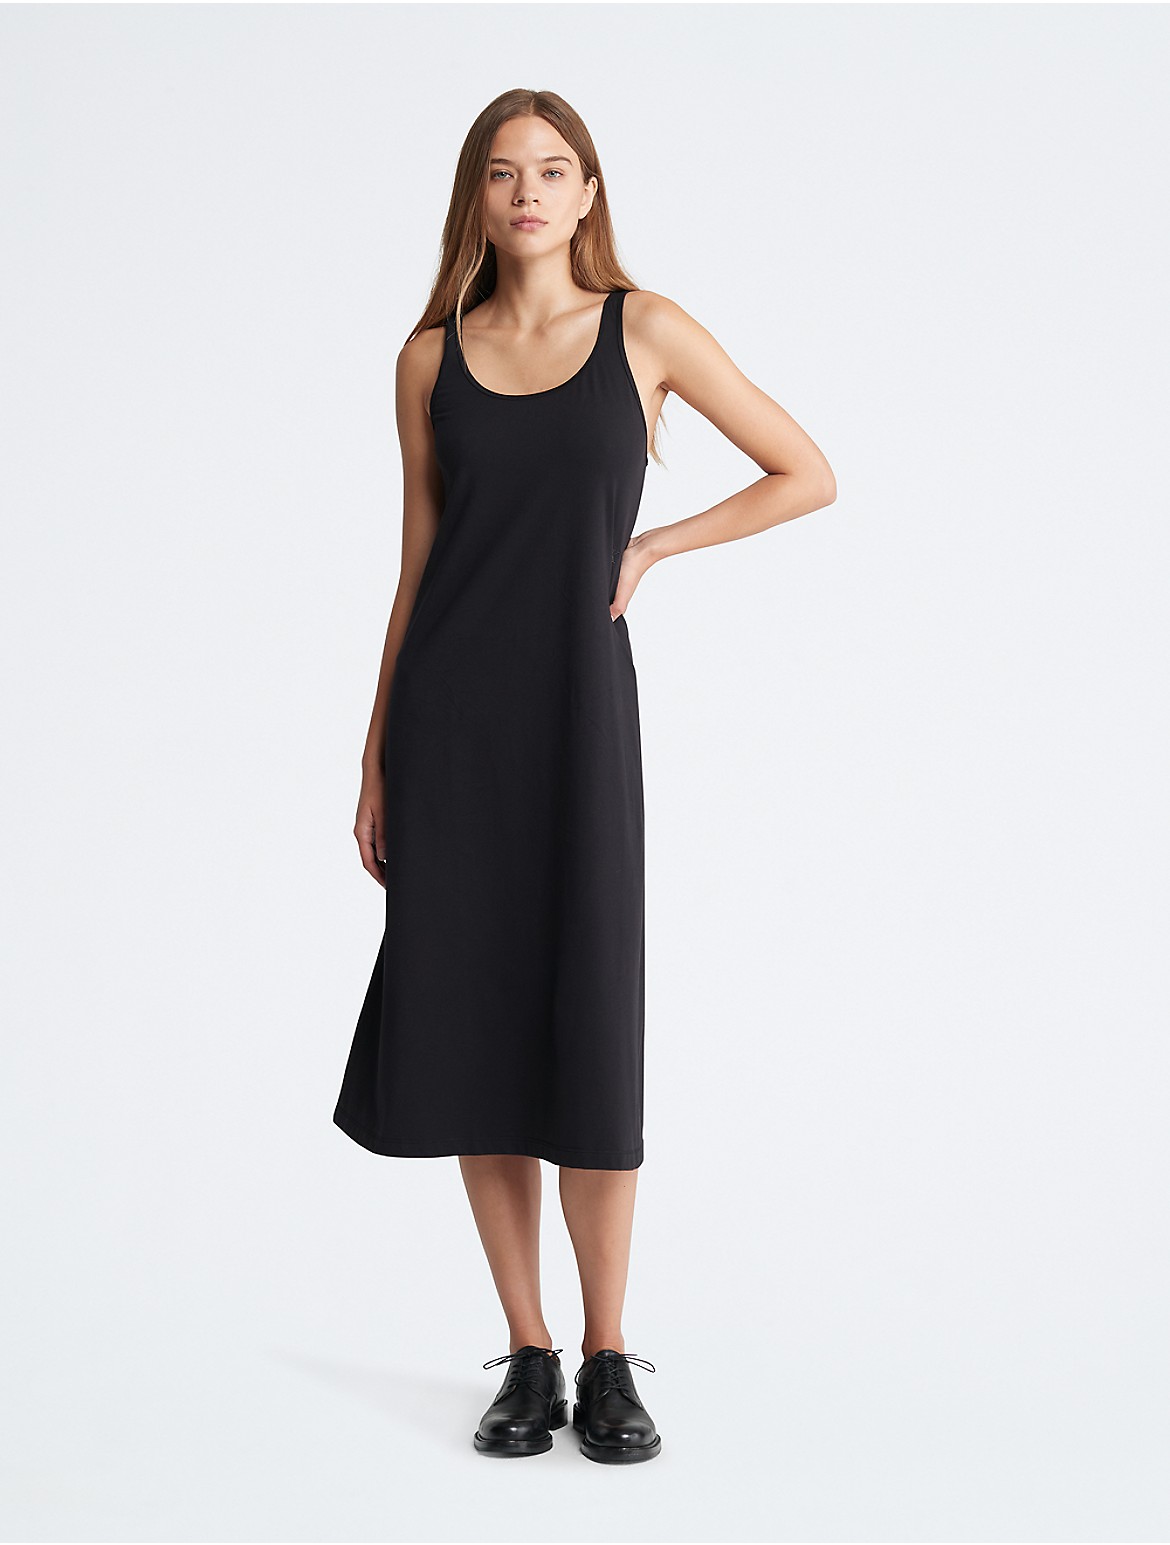 Calvin Klein Women's Modern Stretch Tank Dress - Black - S